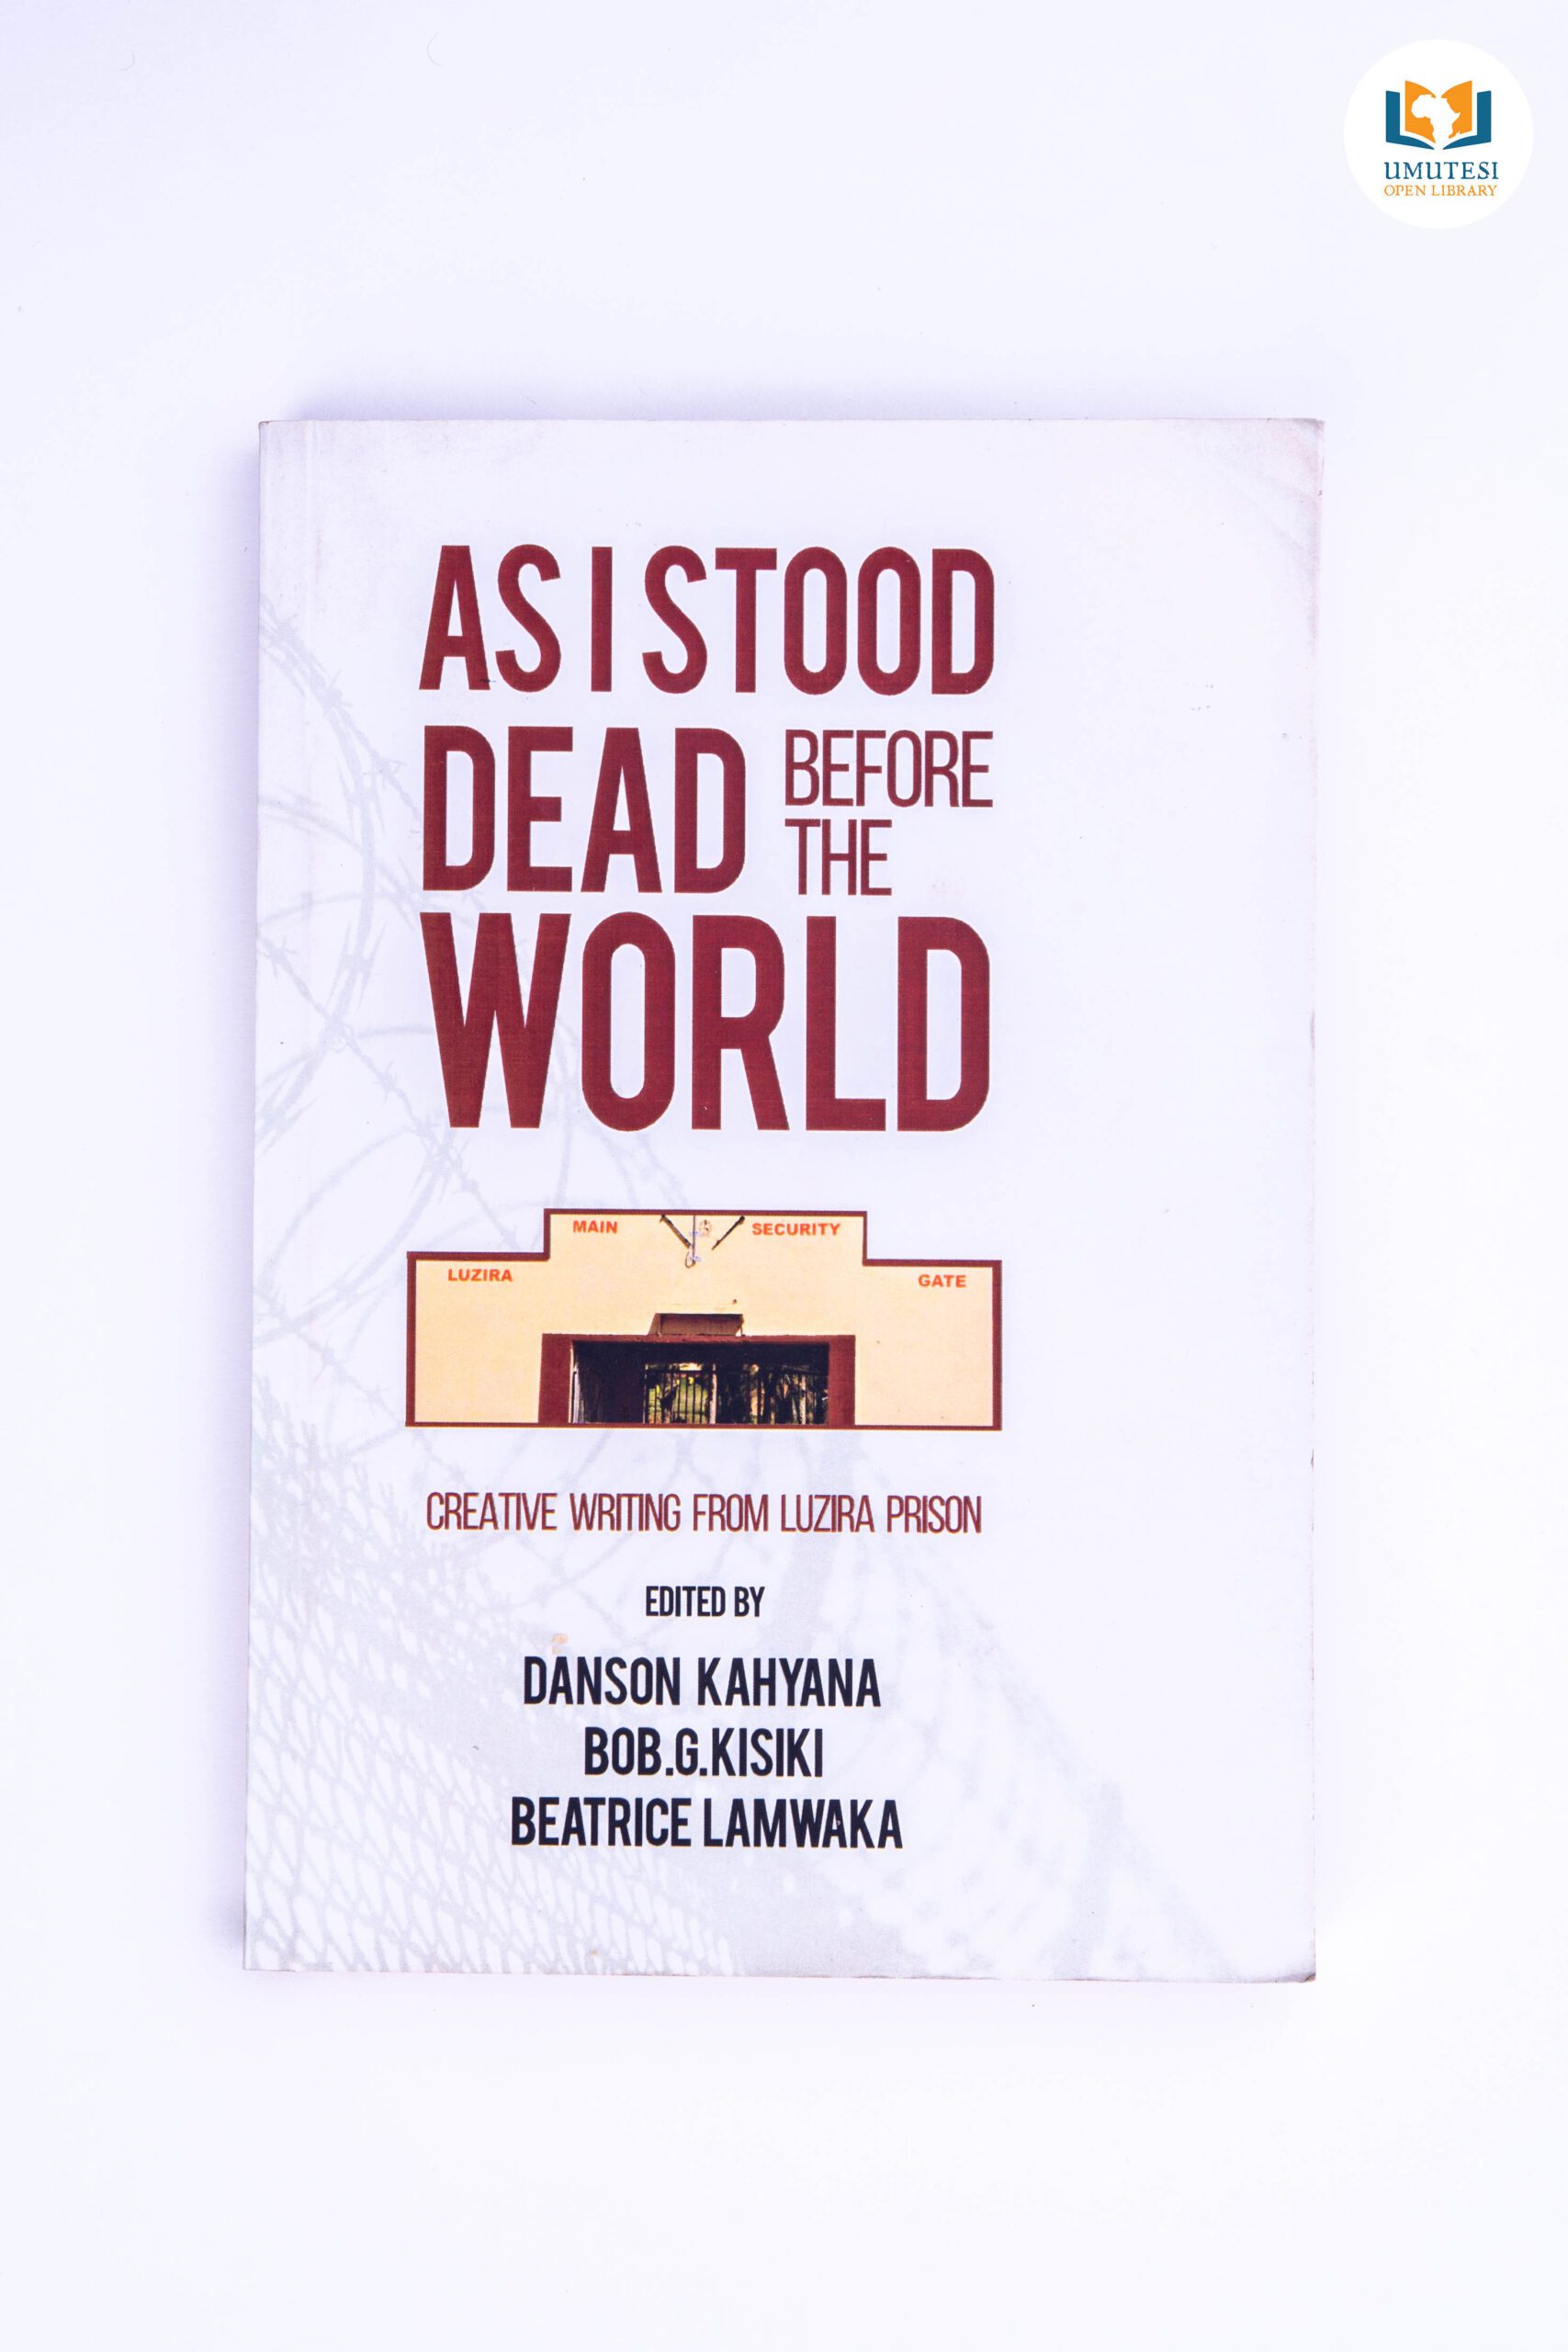 As I Stood Dead Before The World by Danson Kahyana, Bob. G. Kisiki and Beatrice Lamwaka